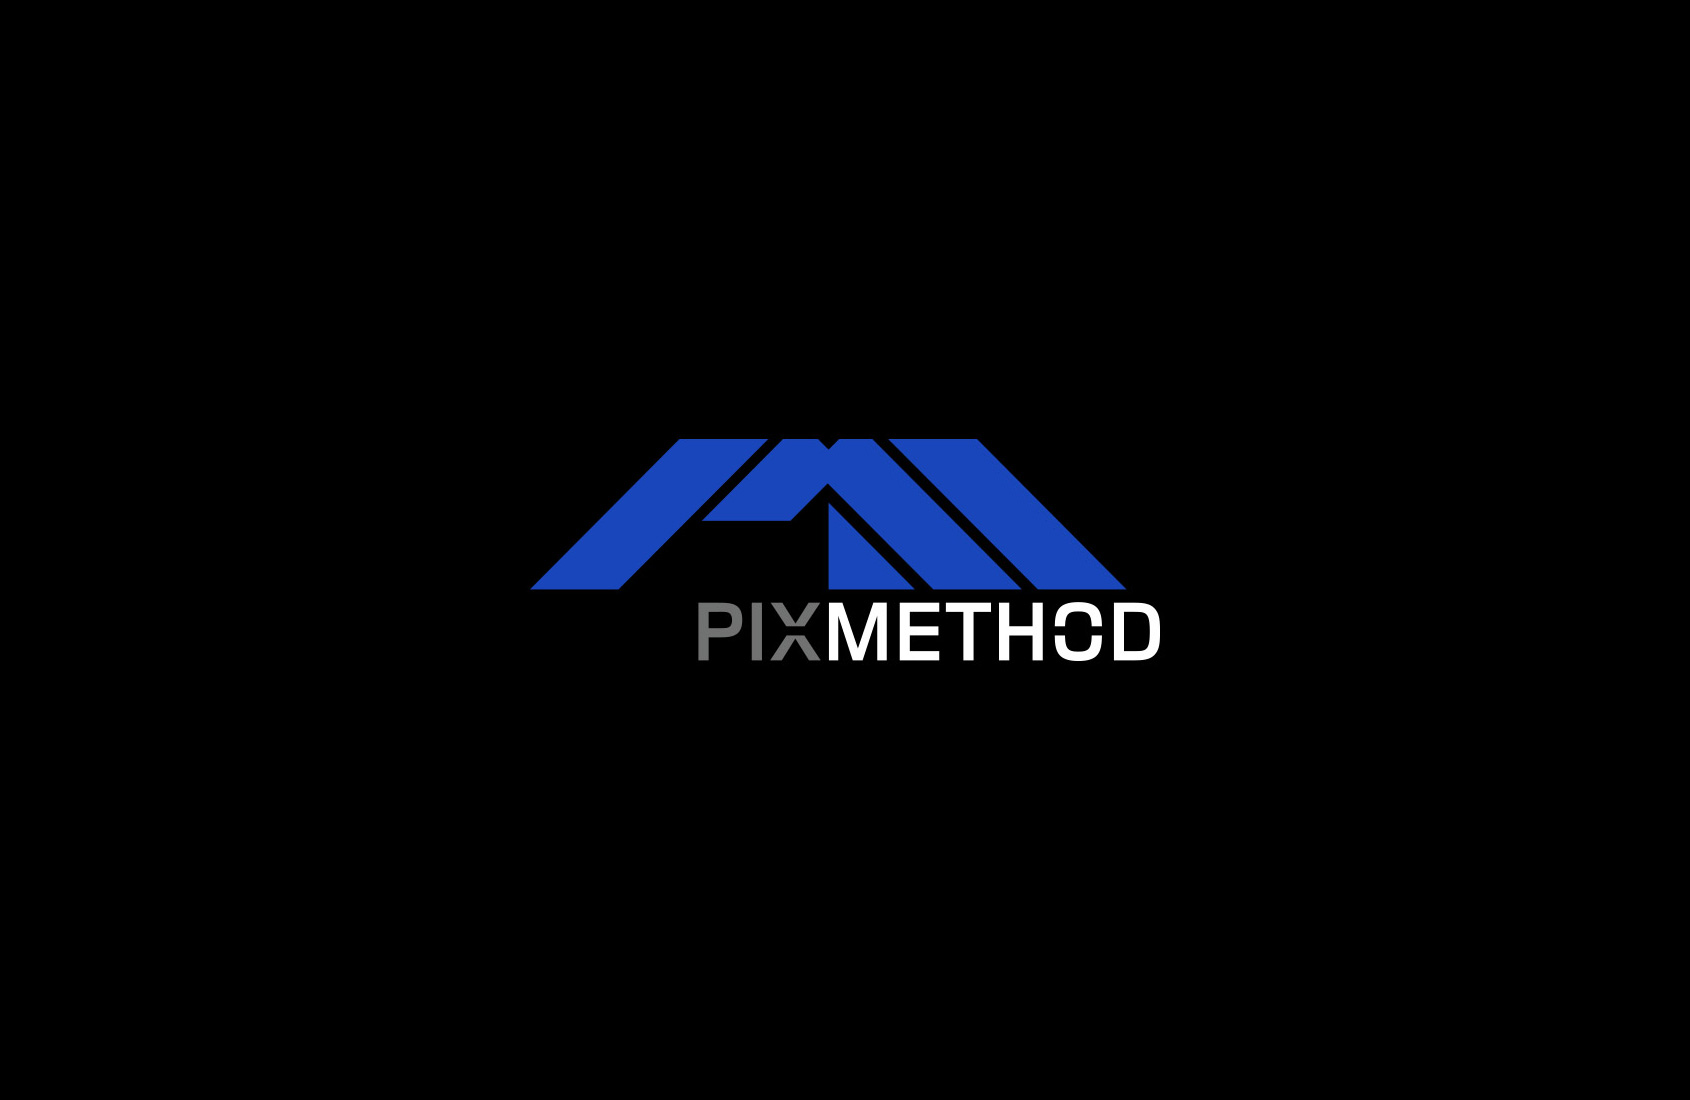 Pixmethod logo